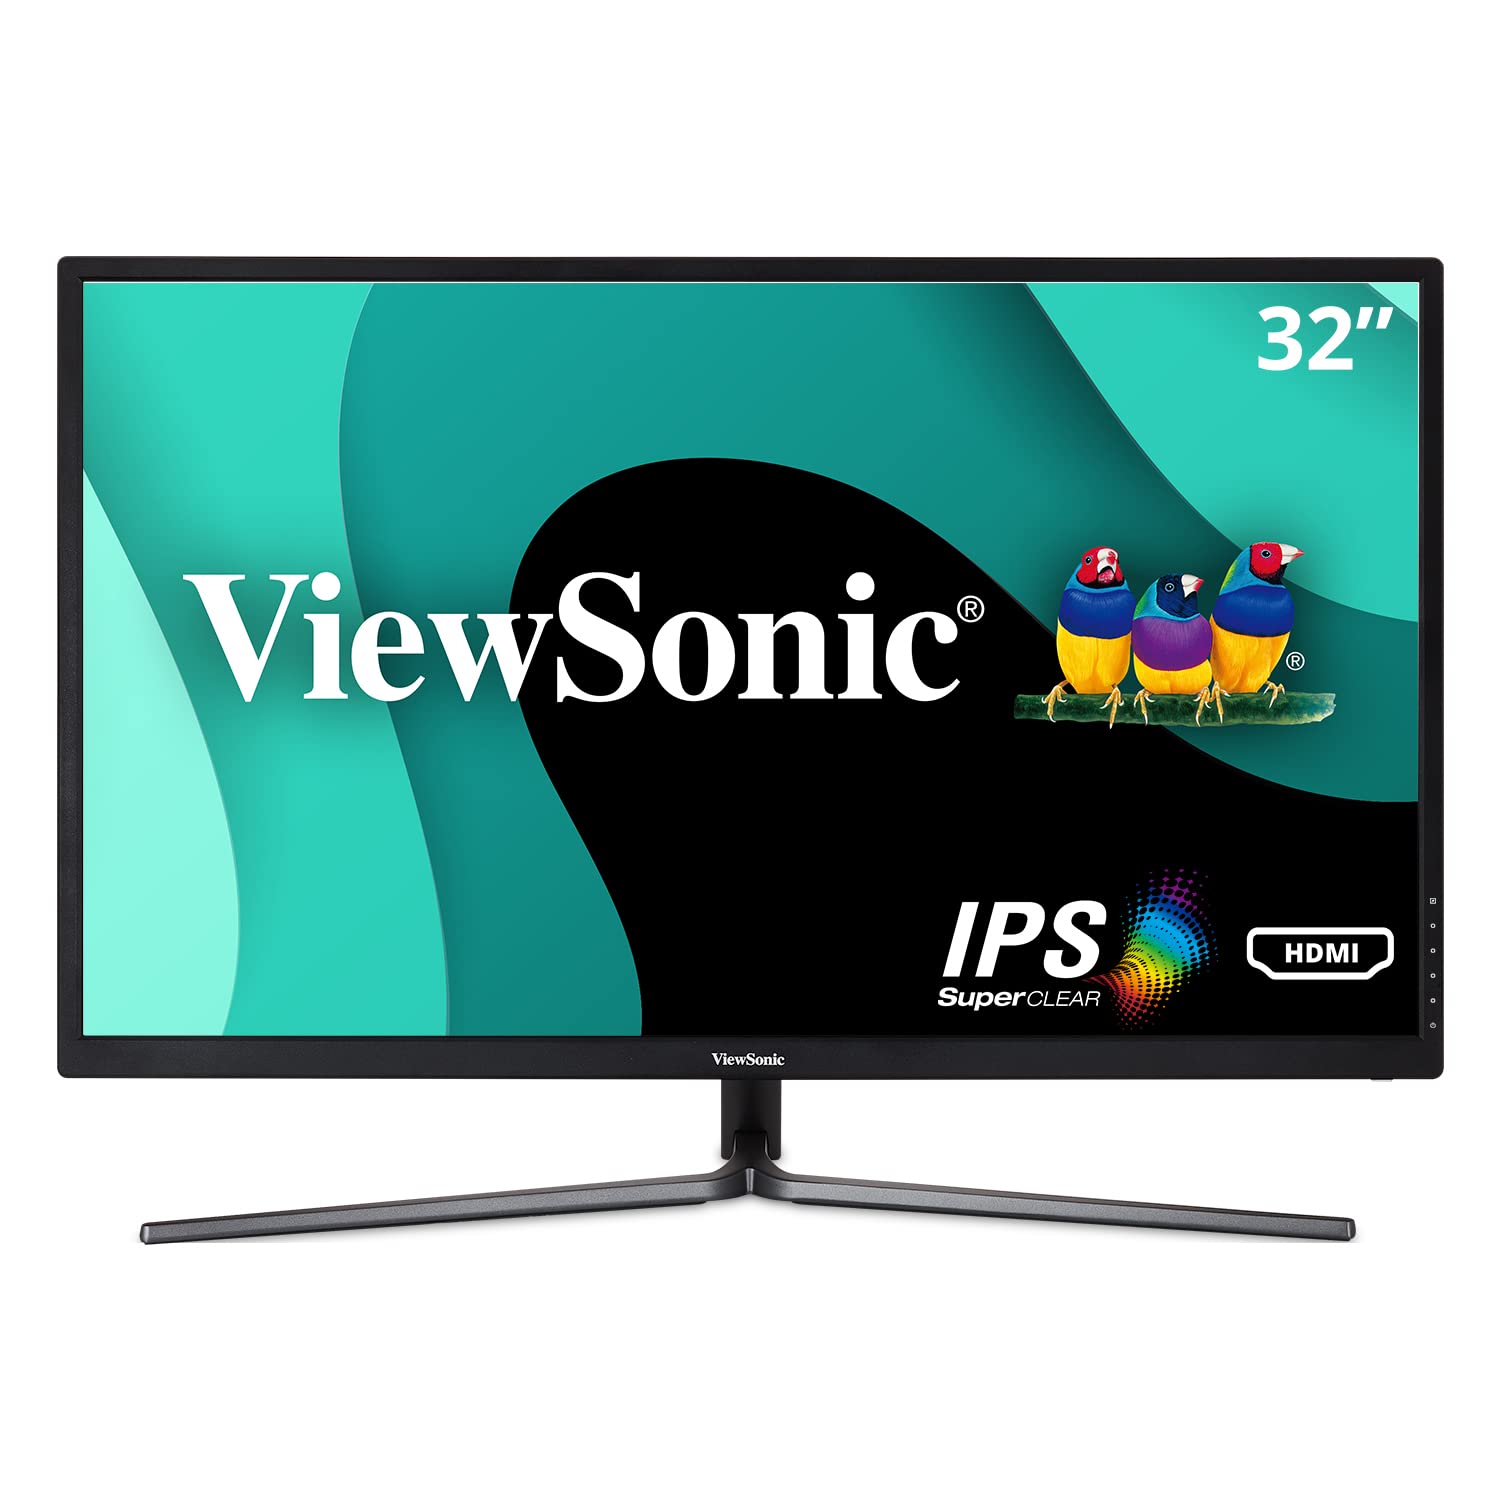 ViewSonic VX3211-2K-MHD 32 Inch IPS WQHD 1440p Monitor with 99% sRGB Color Coverage HDMI VGA and DisplayPort, Black